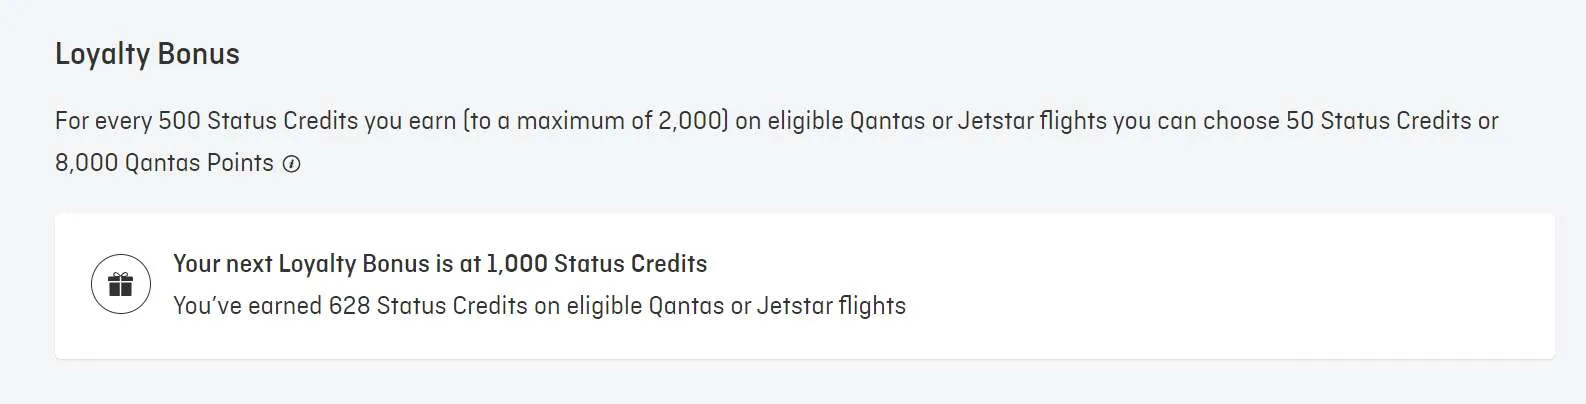 Example Loyalty bonus messaging on Qantas site